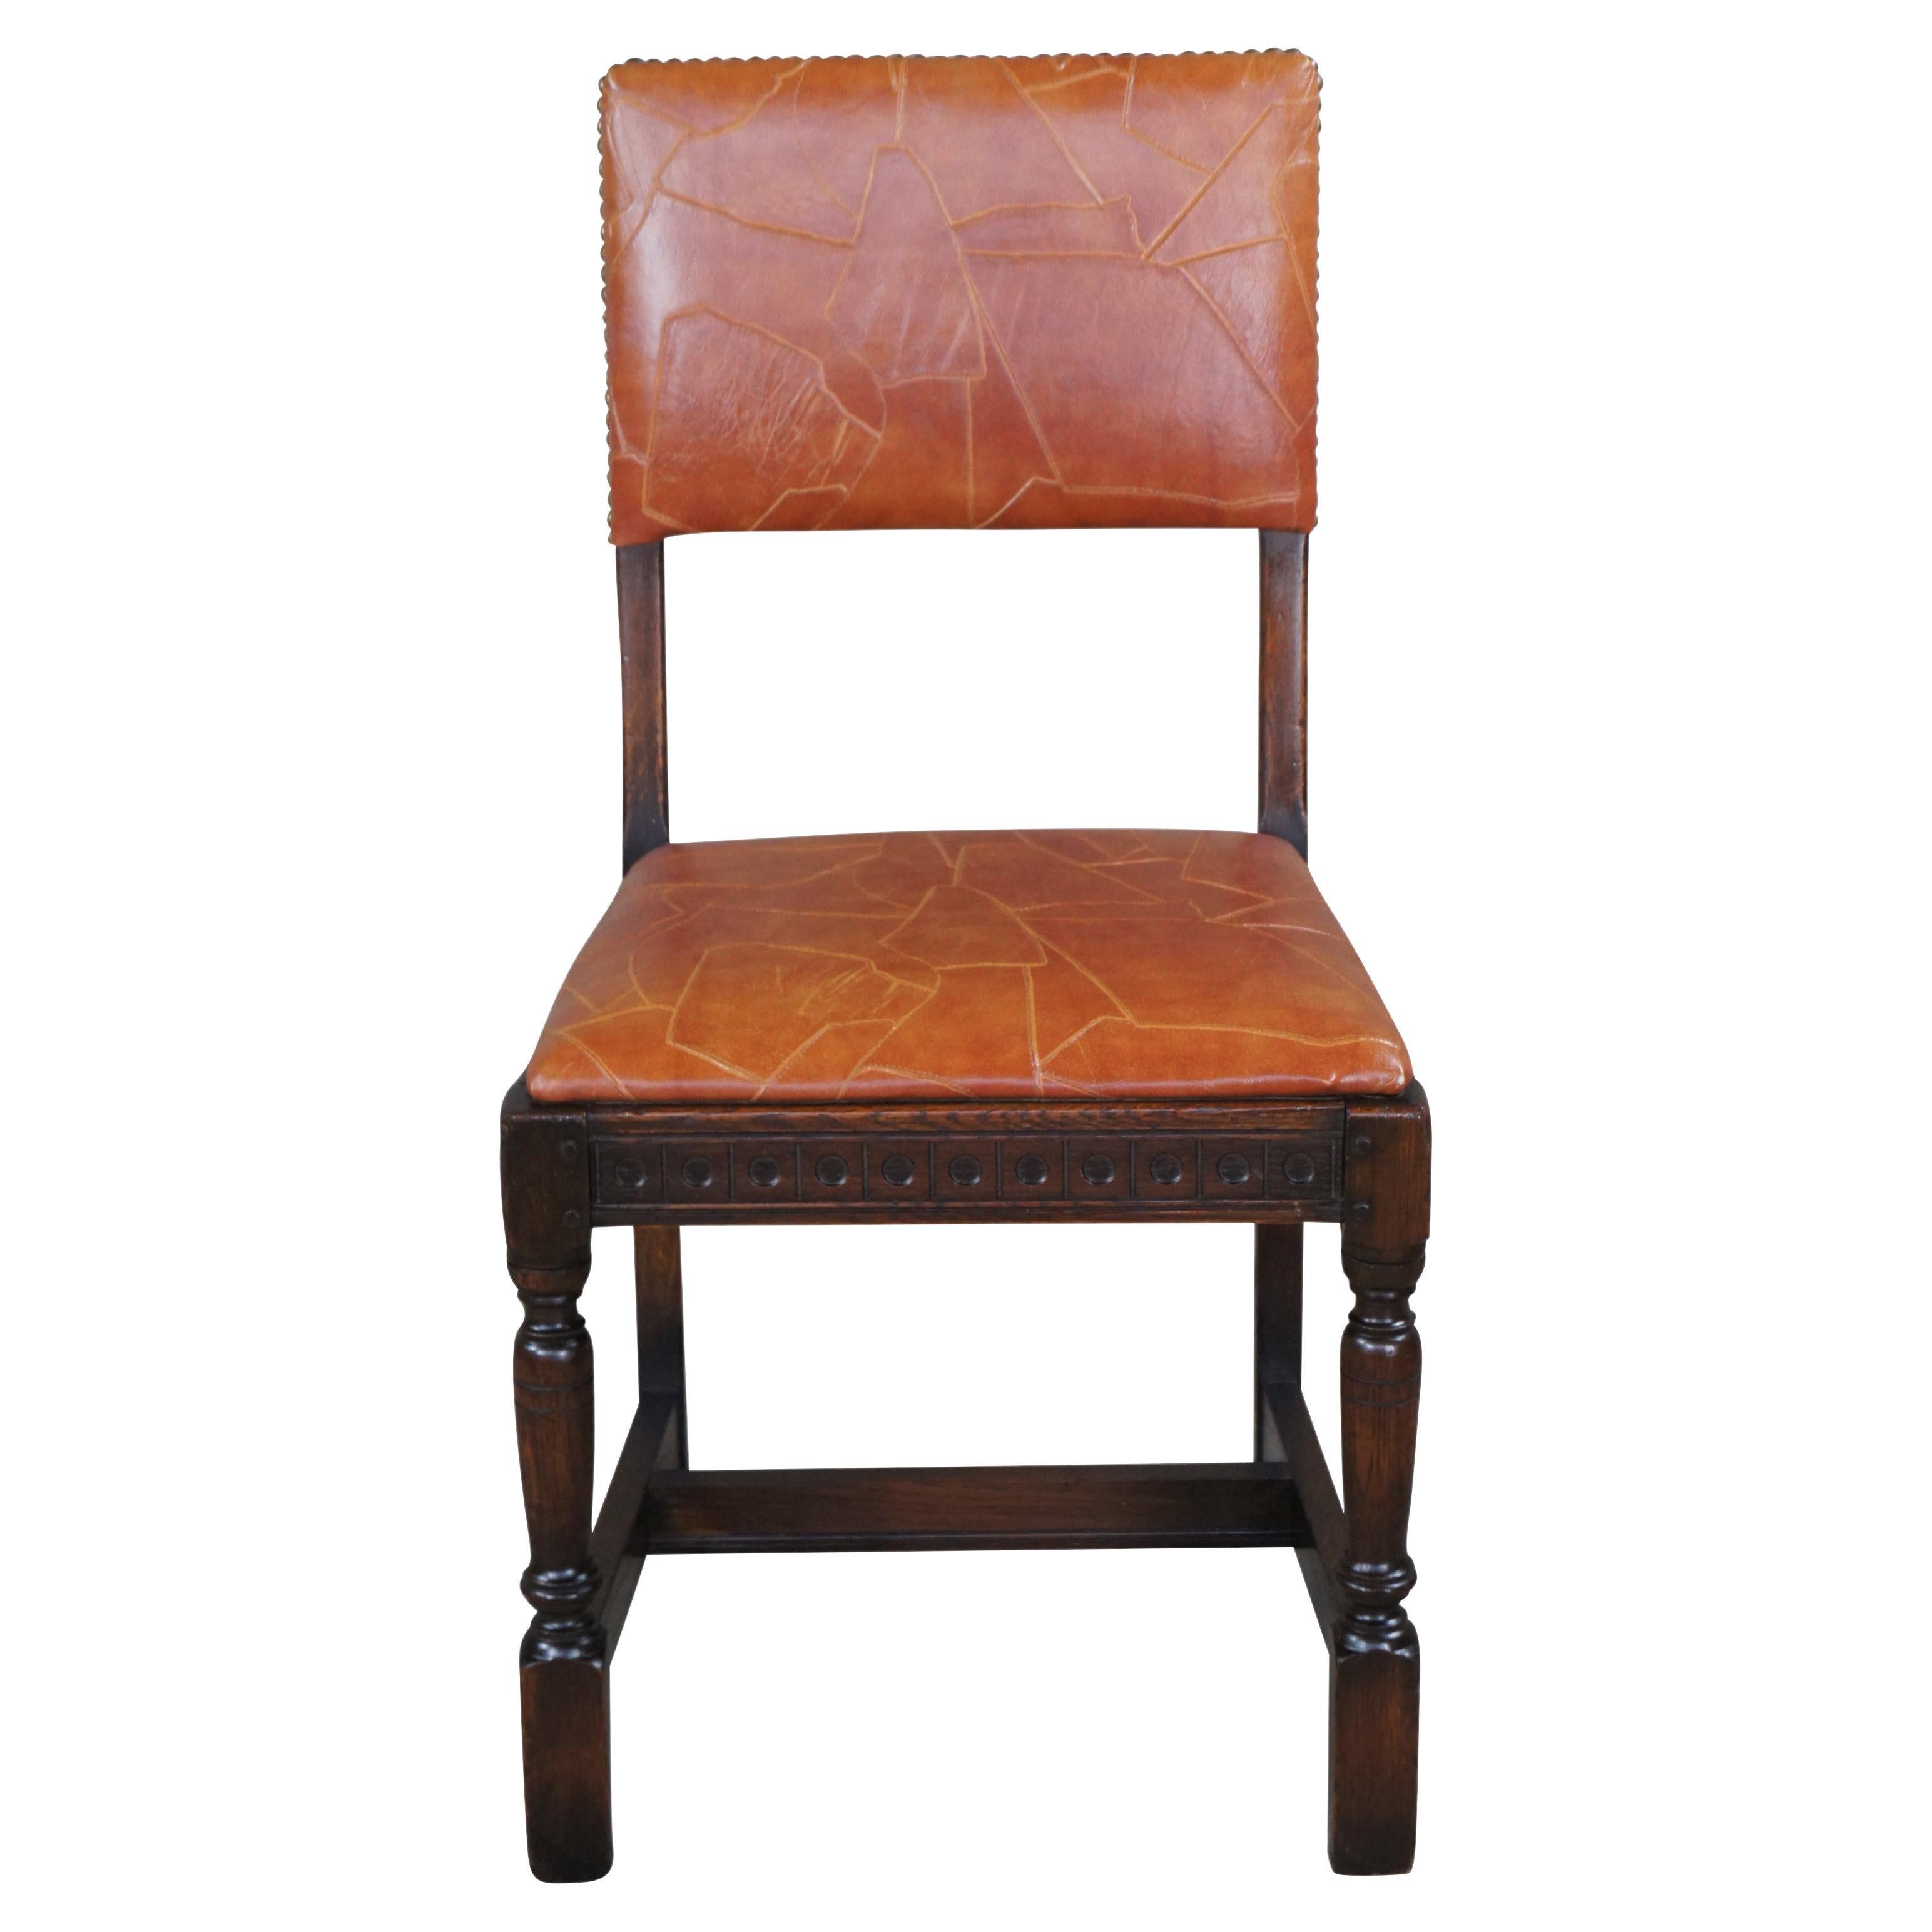 Antique Saginaw Furniture Jacobean Spanish Revival Orange Leather Oak Side Chair For Sale